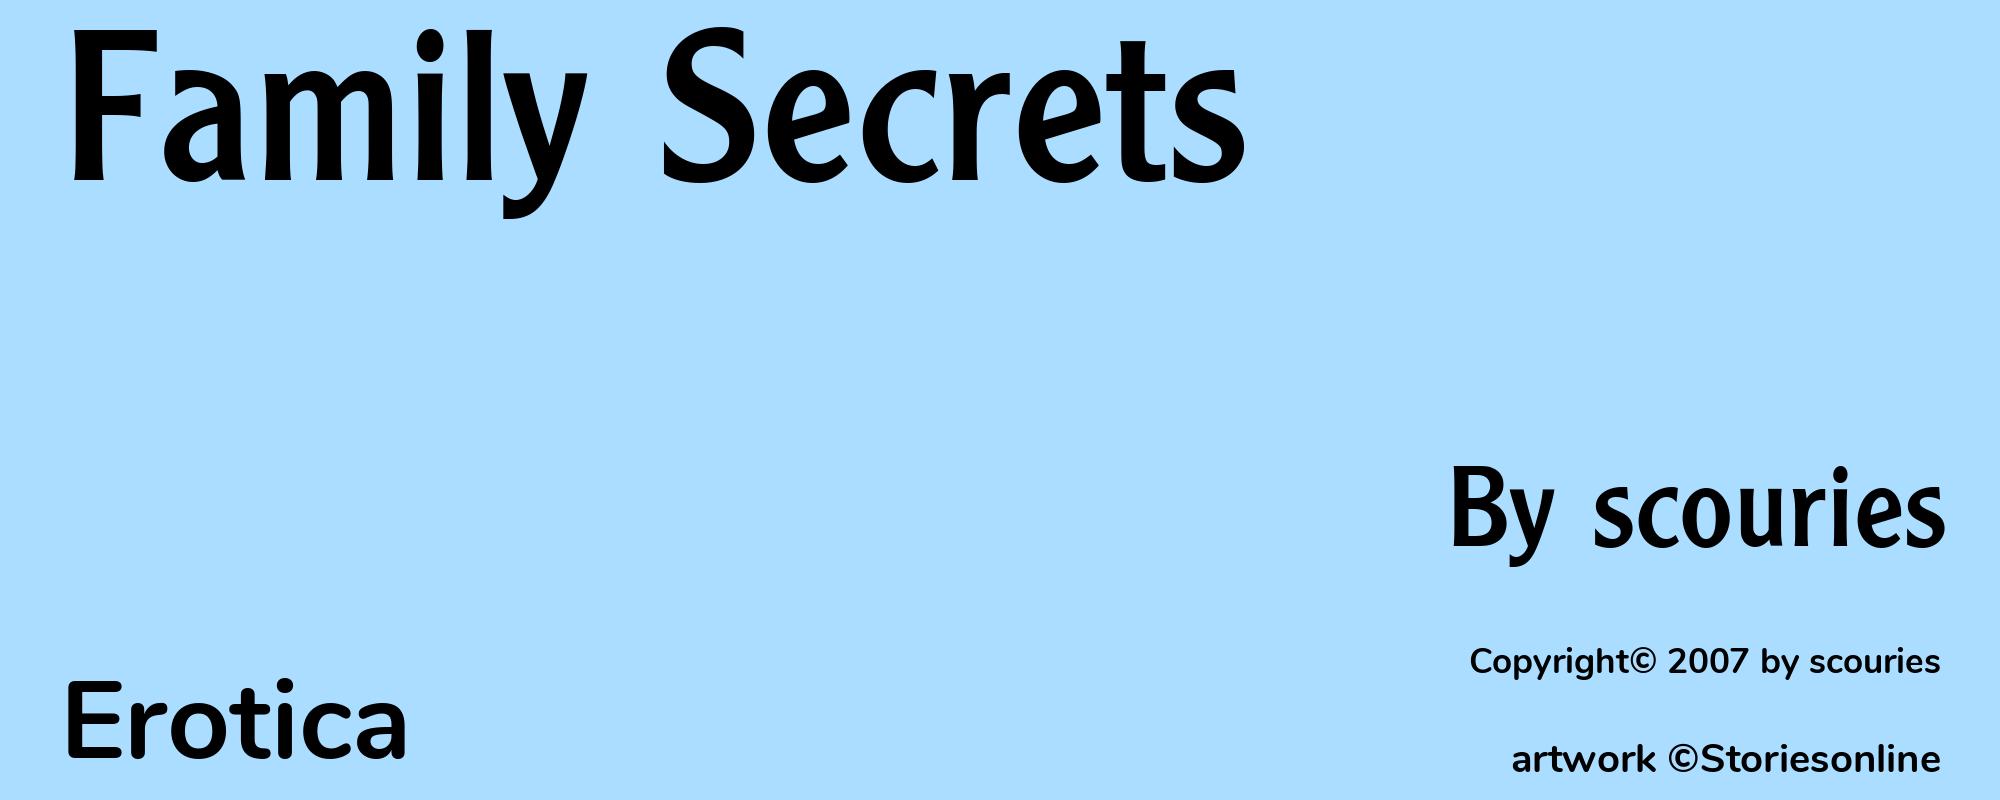 Family Secrets - Cover